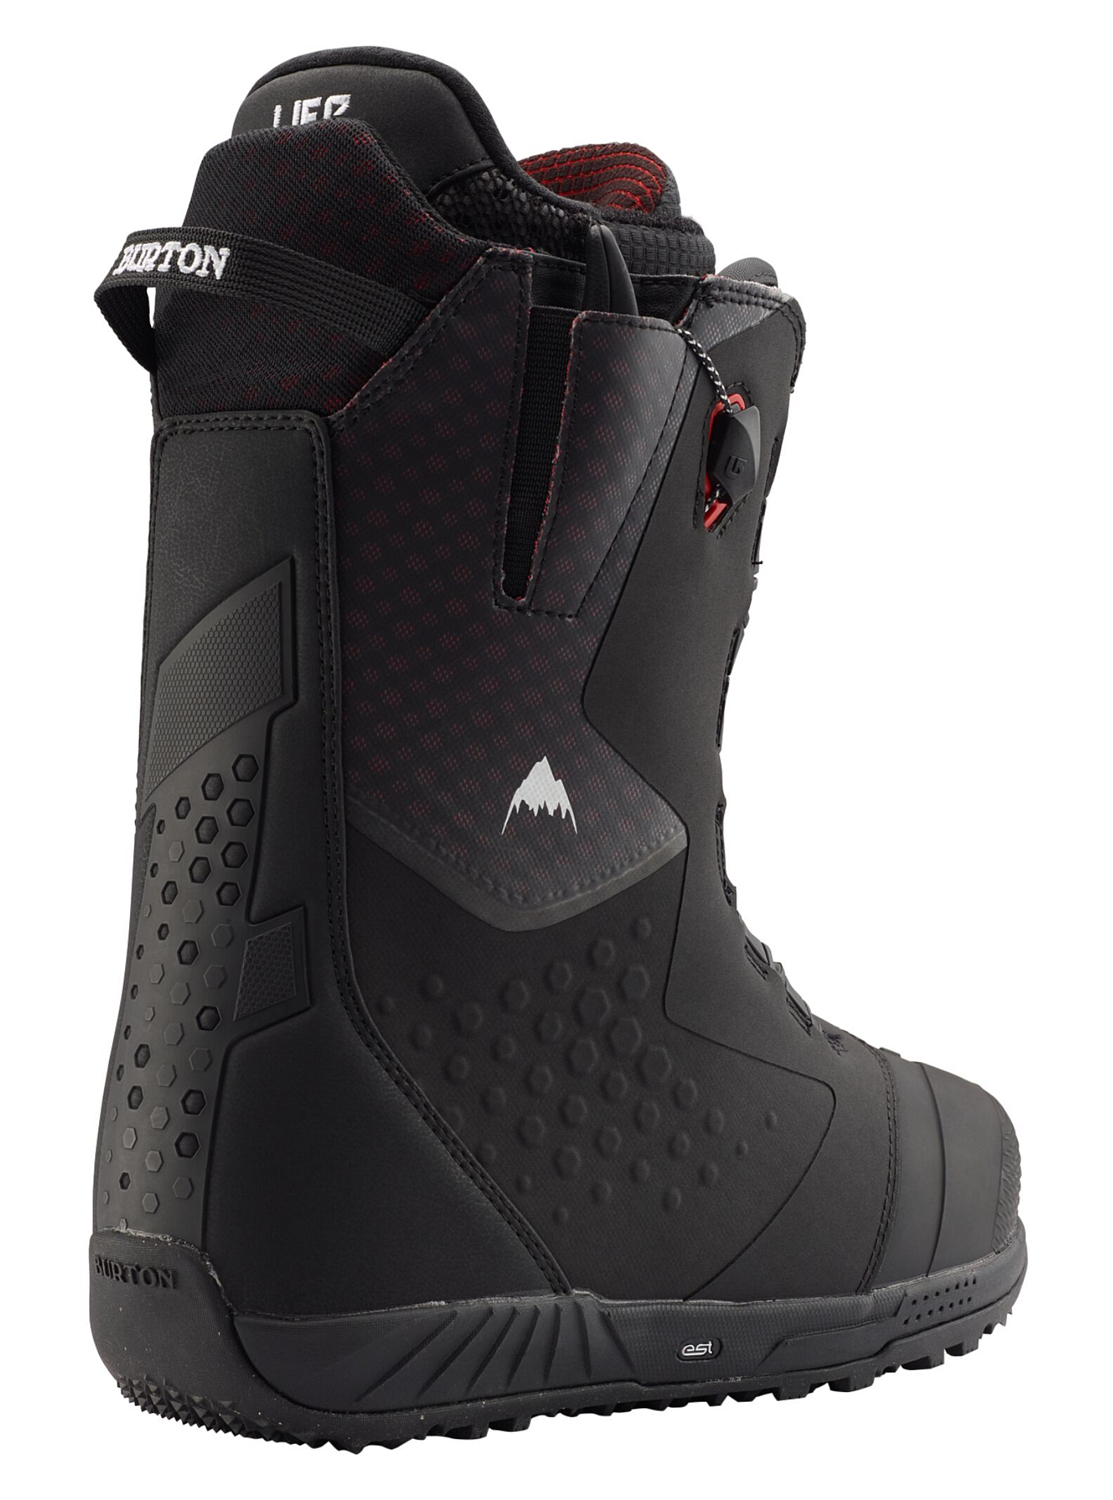 Ботинки для сноуборда BURTON 2019-20 Ion Black/Red